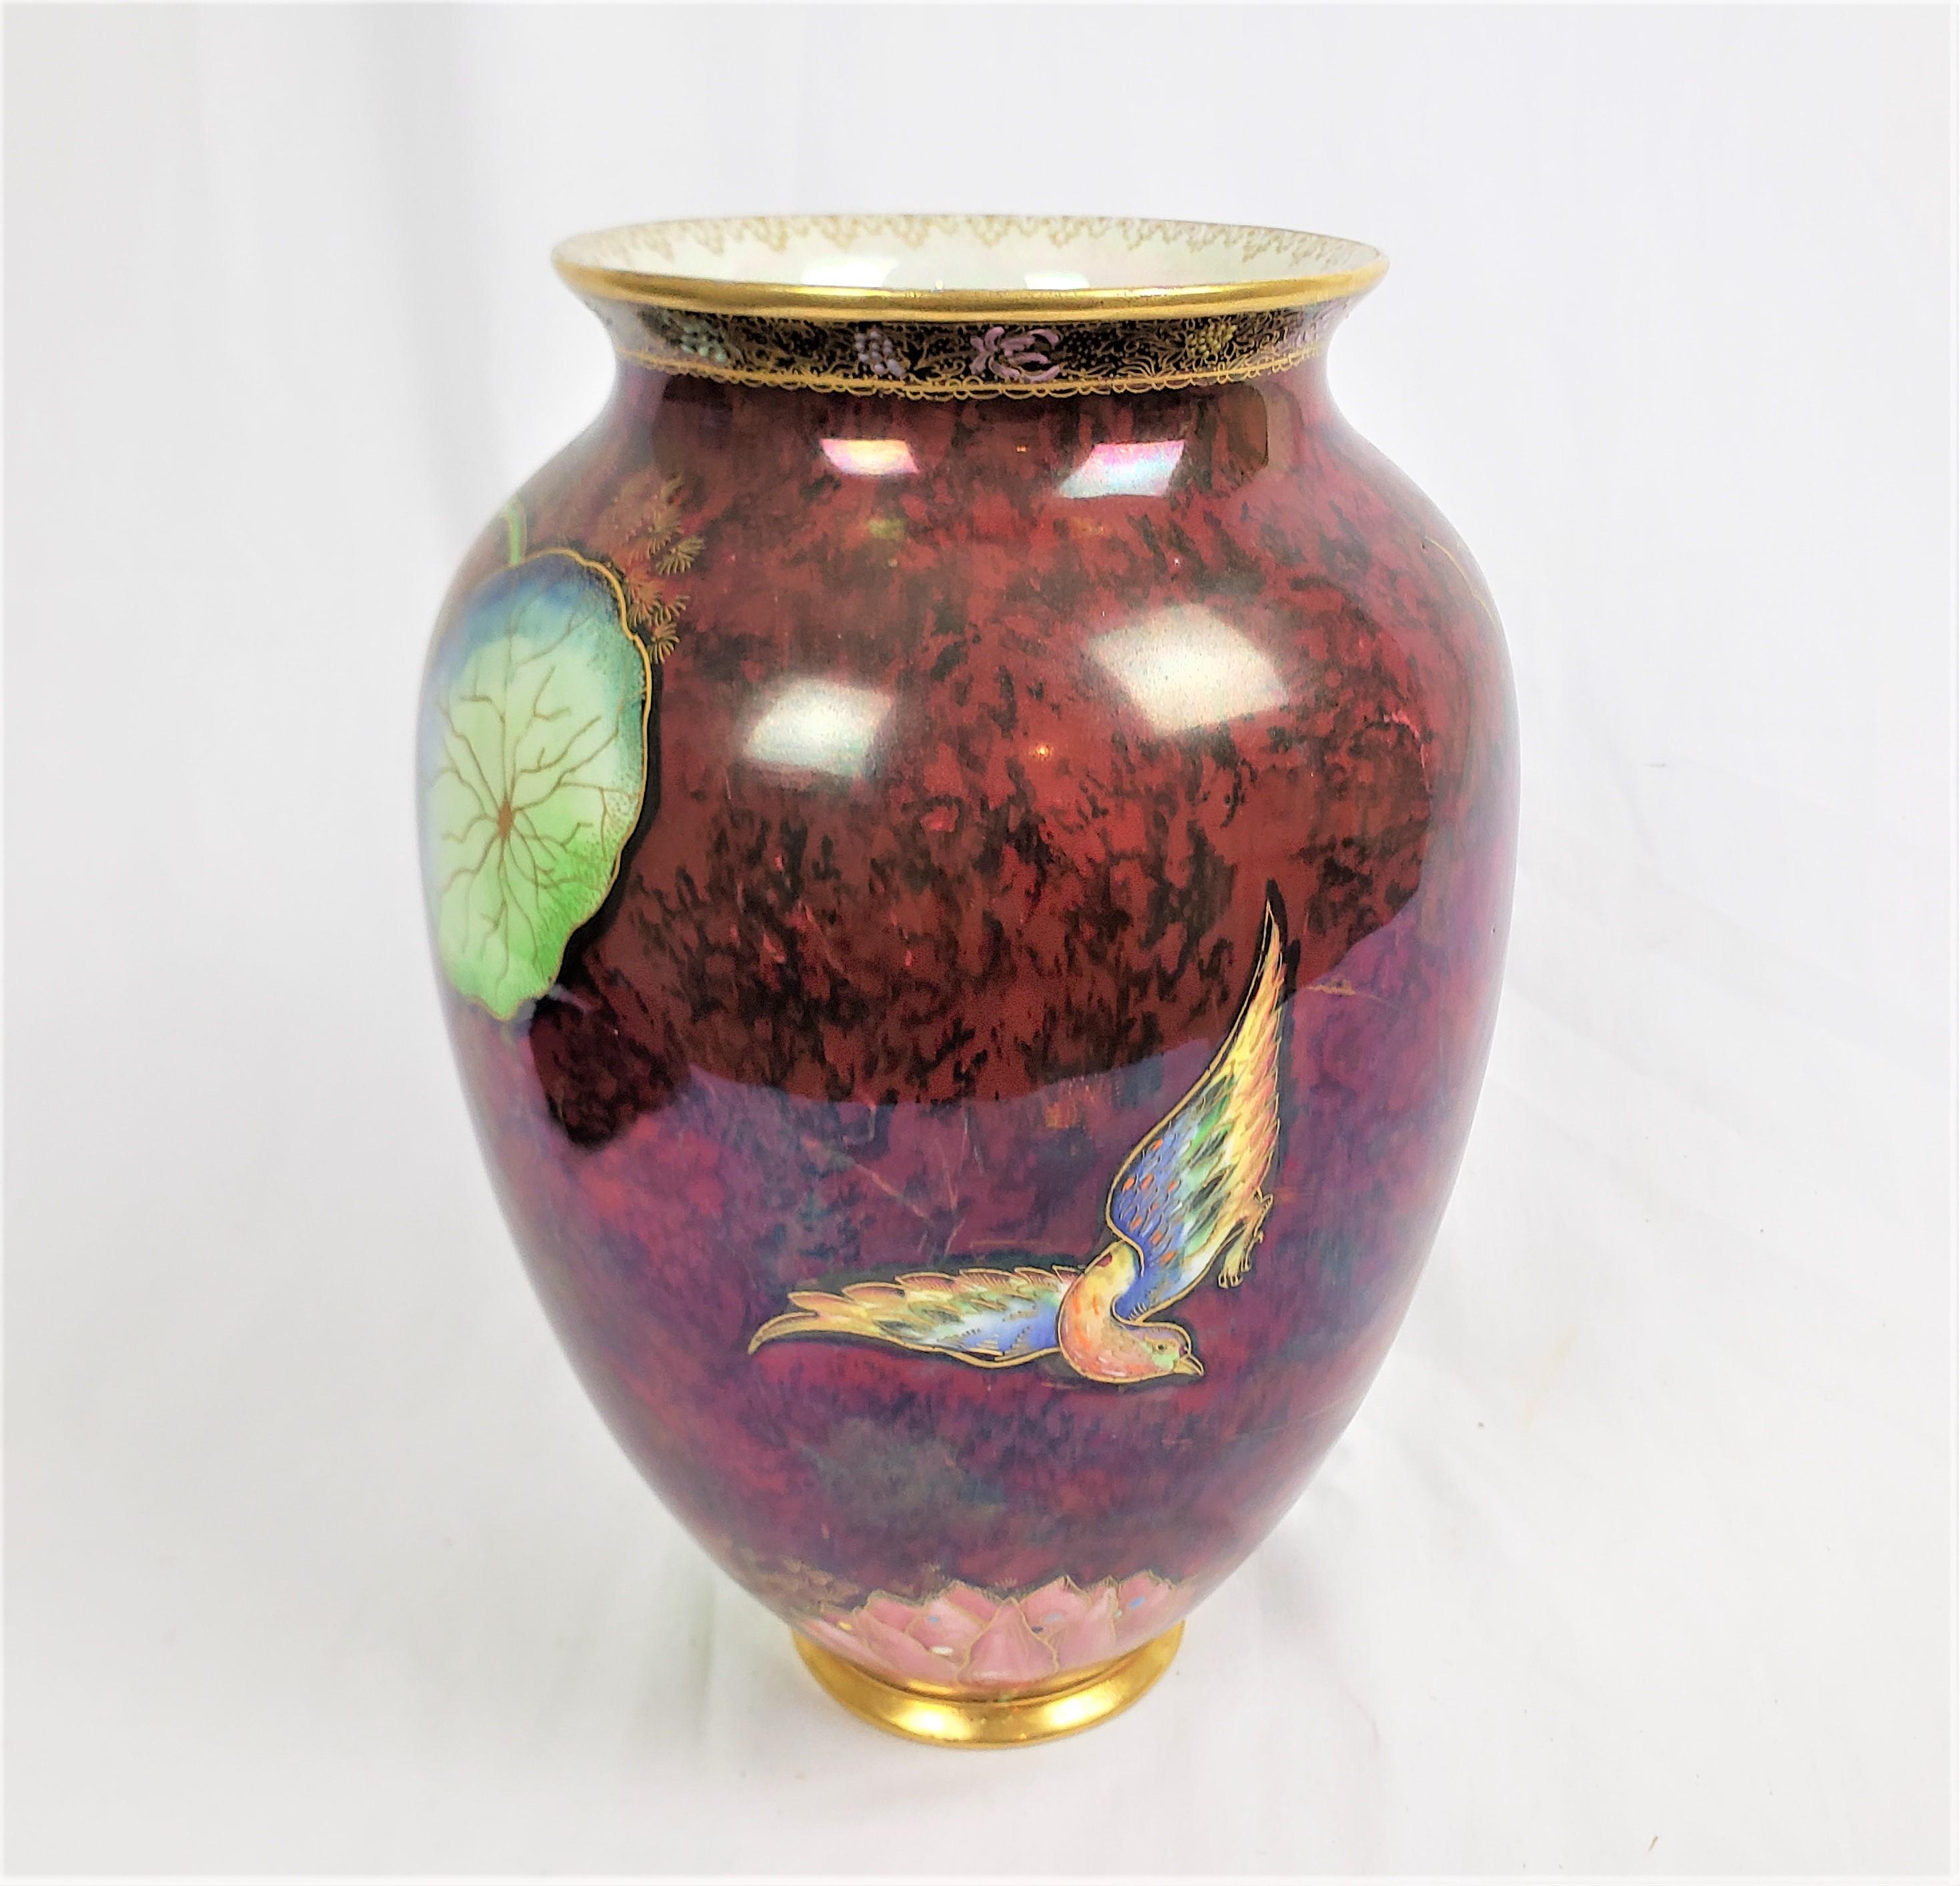 Pottery Antique Art Deco Era Carlton Ware Vase with Asian Inspired Decoration